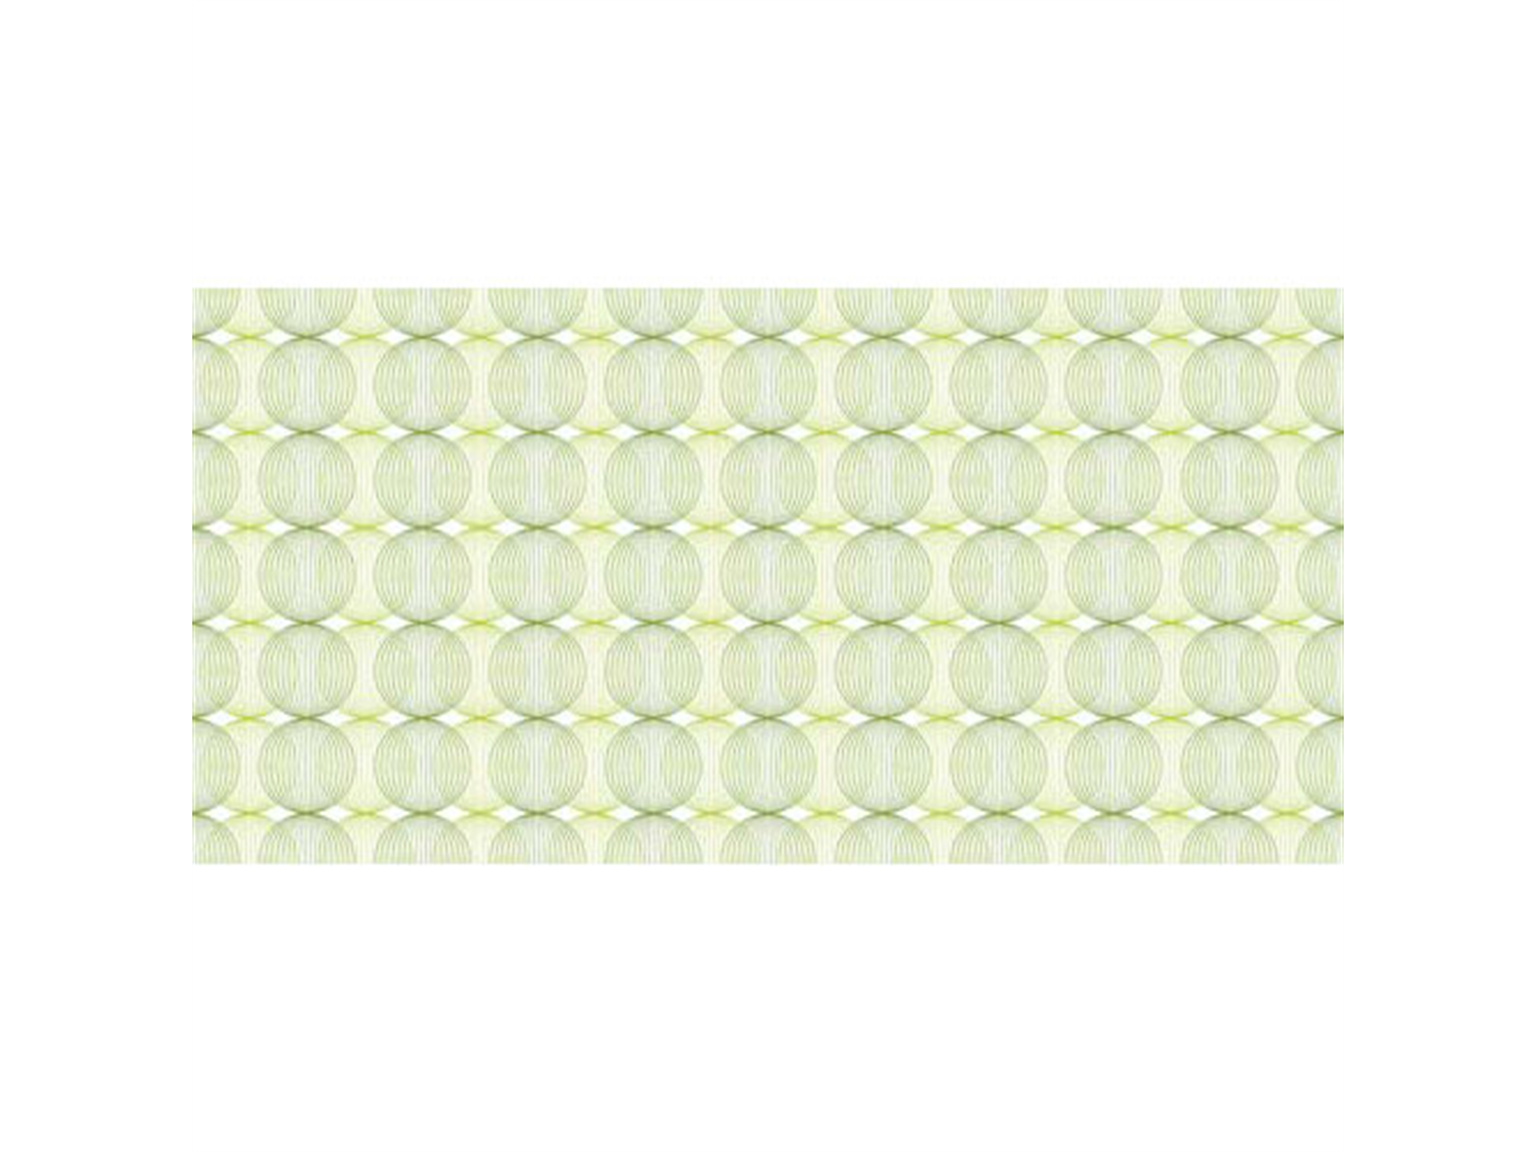 TISCHLAEUFER AIRLAID  40 cm breit x 24 lfm., Ludo (lime-oliv)